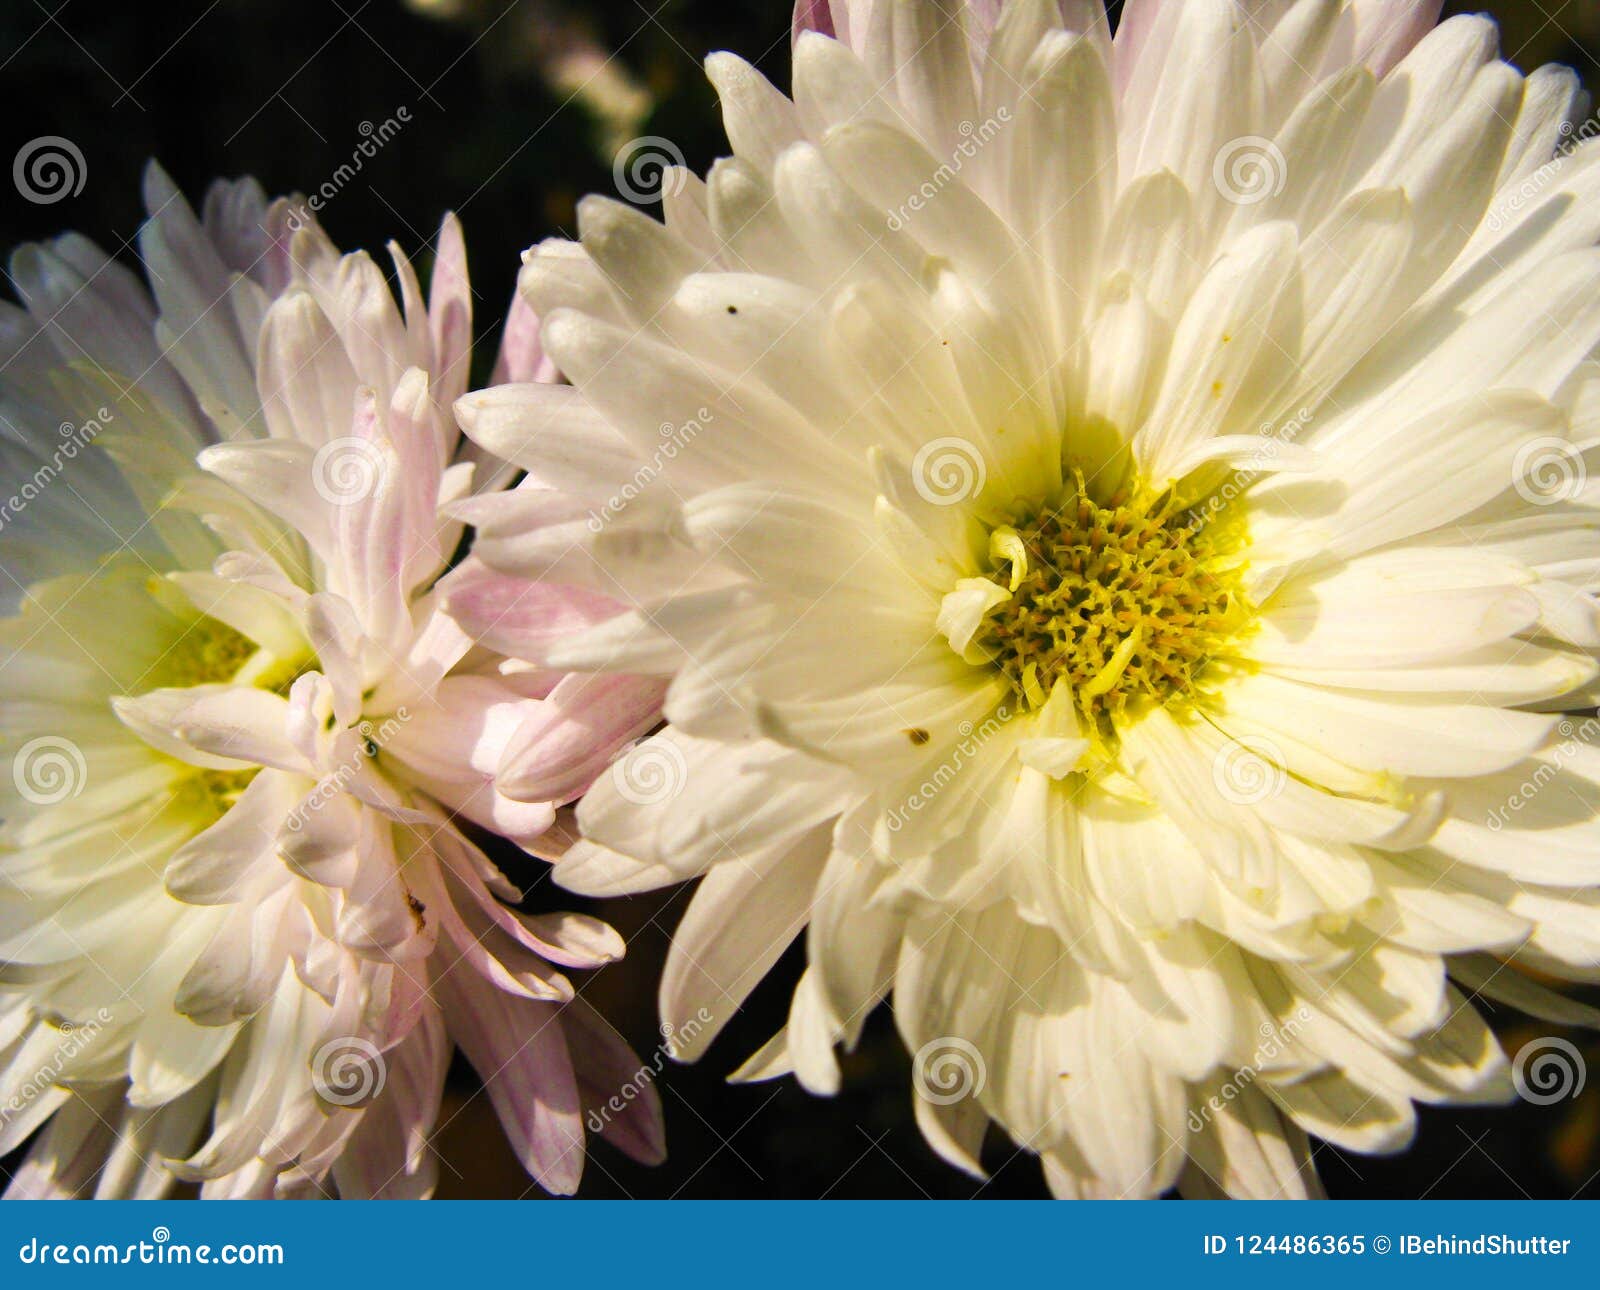 White And Pink China Aster Flower Shot In Detail Stock Image Image Of Chrysanthemum Close 124486365